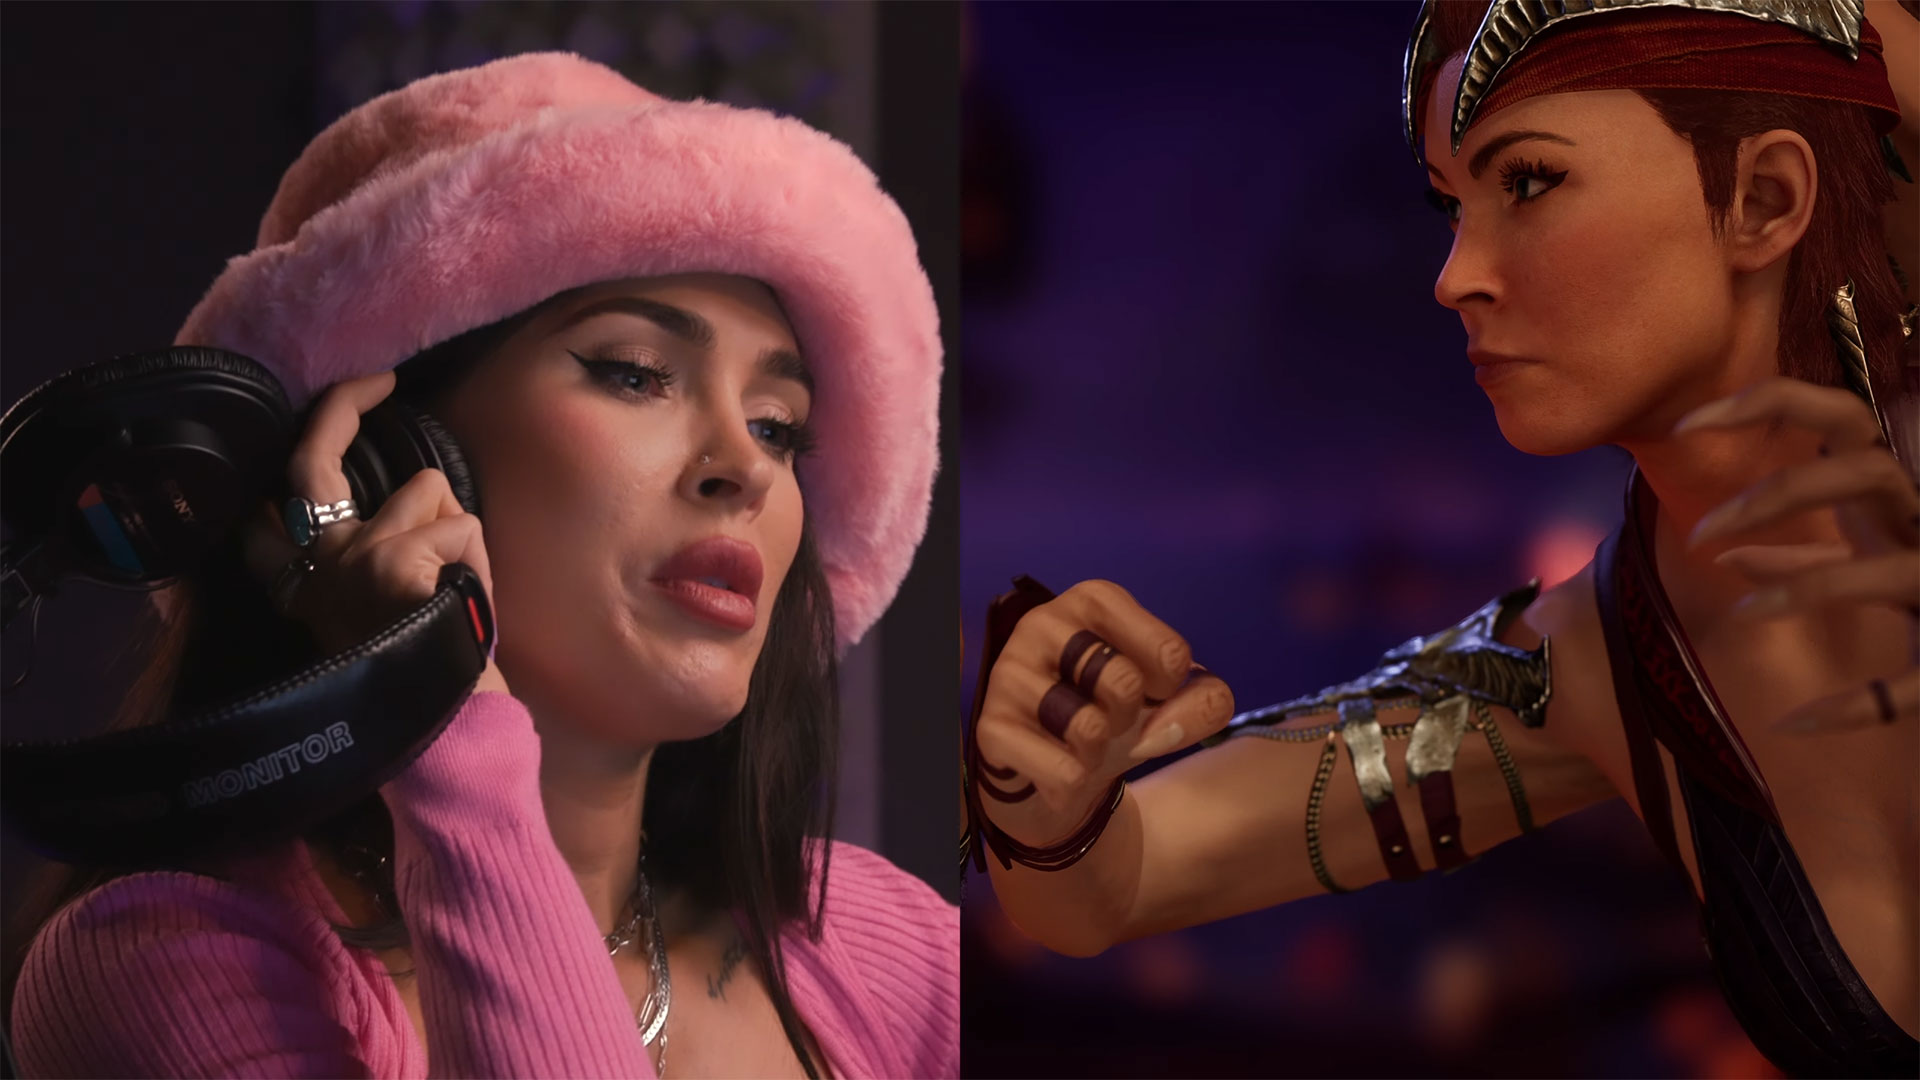 Actress Megan Fox is taking on the role of Nitara in Mortal Kombat 1